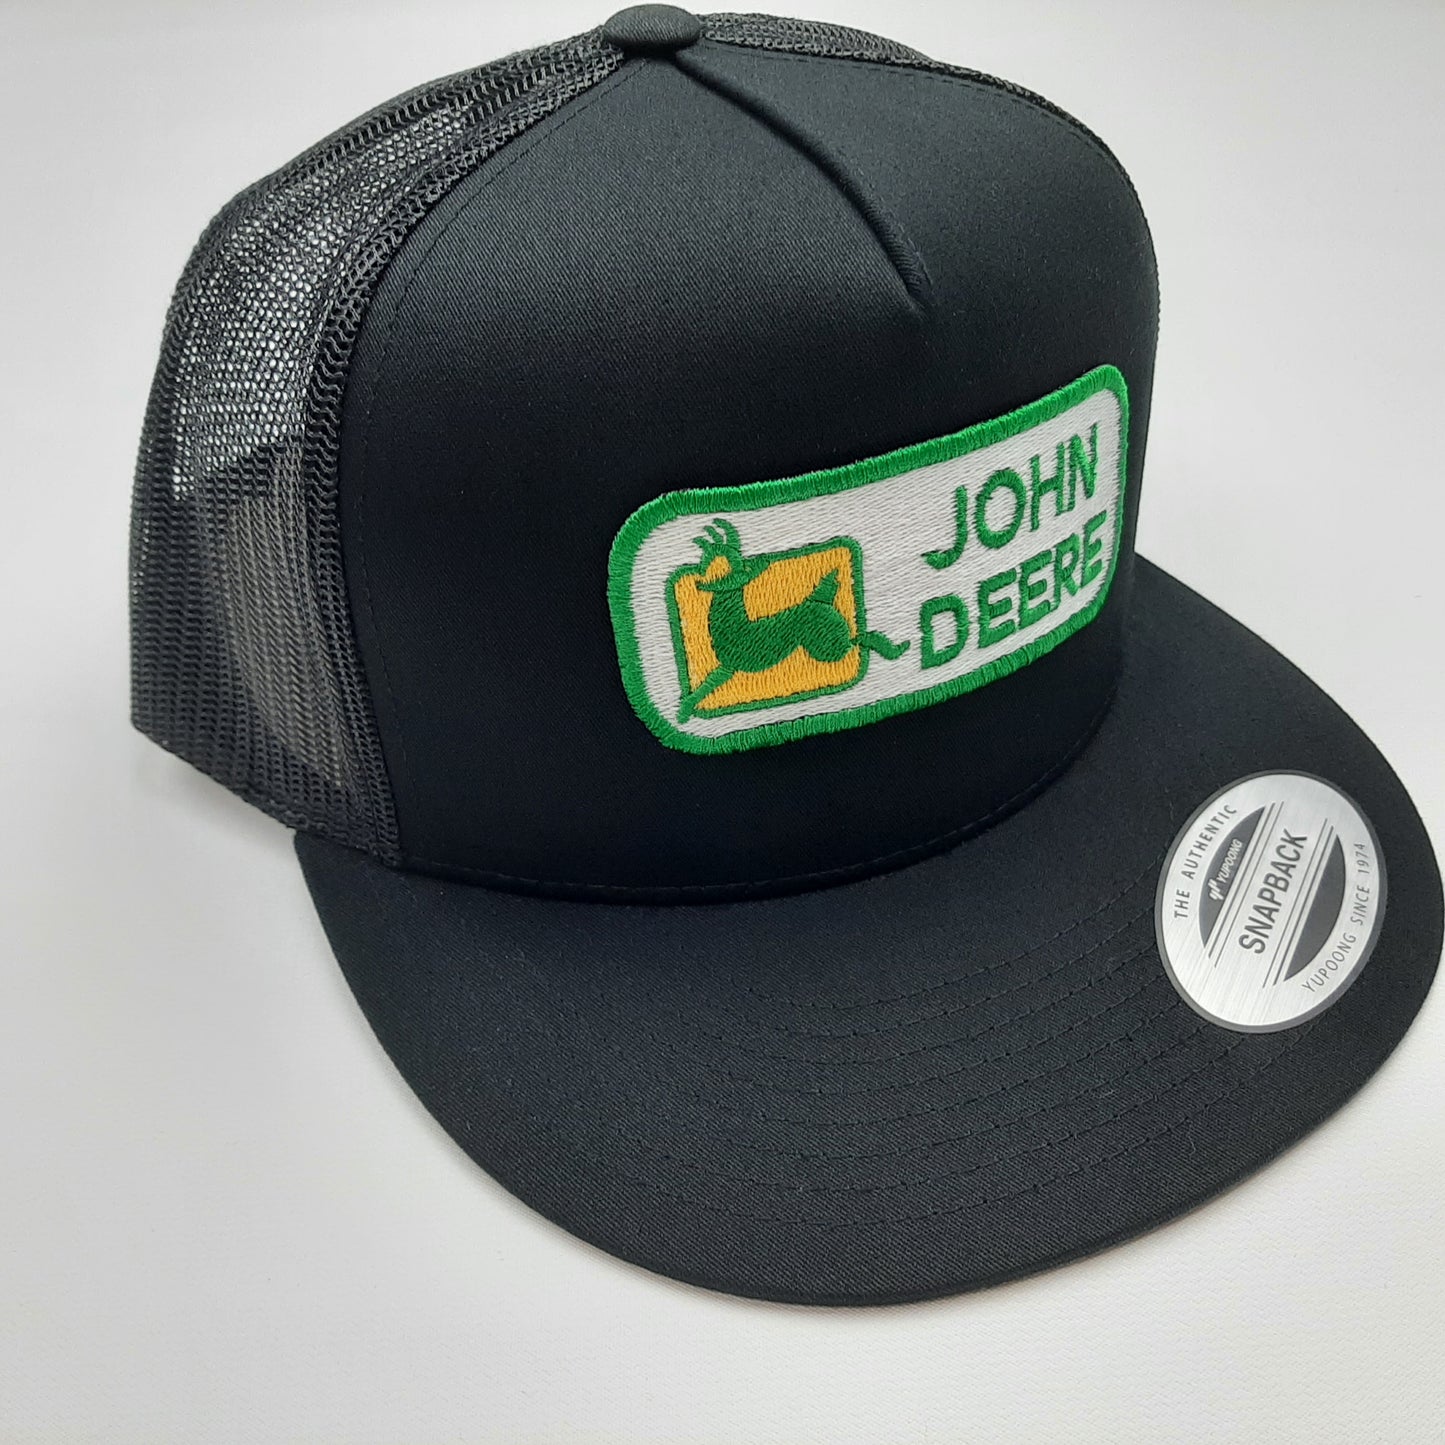 John Deere Embroidered Patch Flat Bill Mesh Snapback Cap Hat Black Yupoong